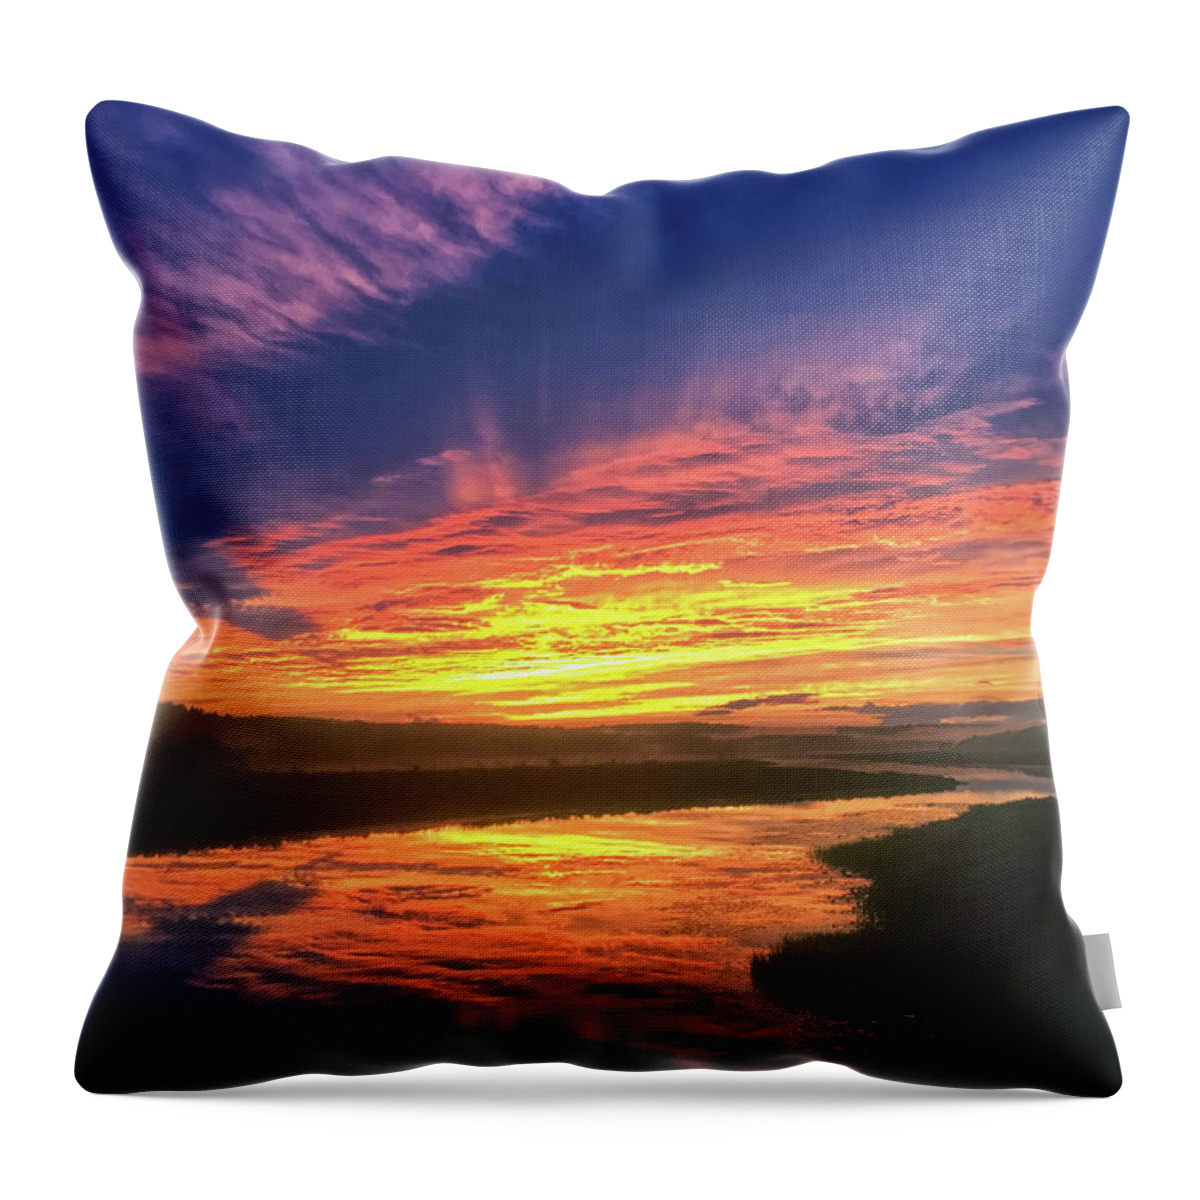 Sunset Throw Pillow featuring the photograph Sunset after the rain by David Pratt